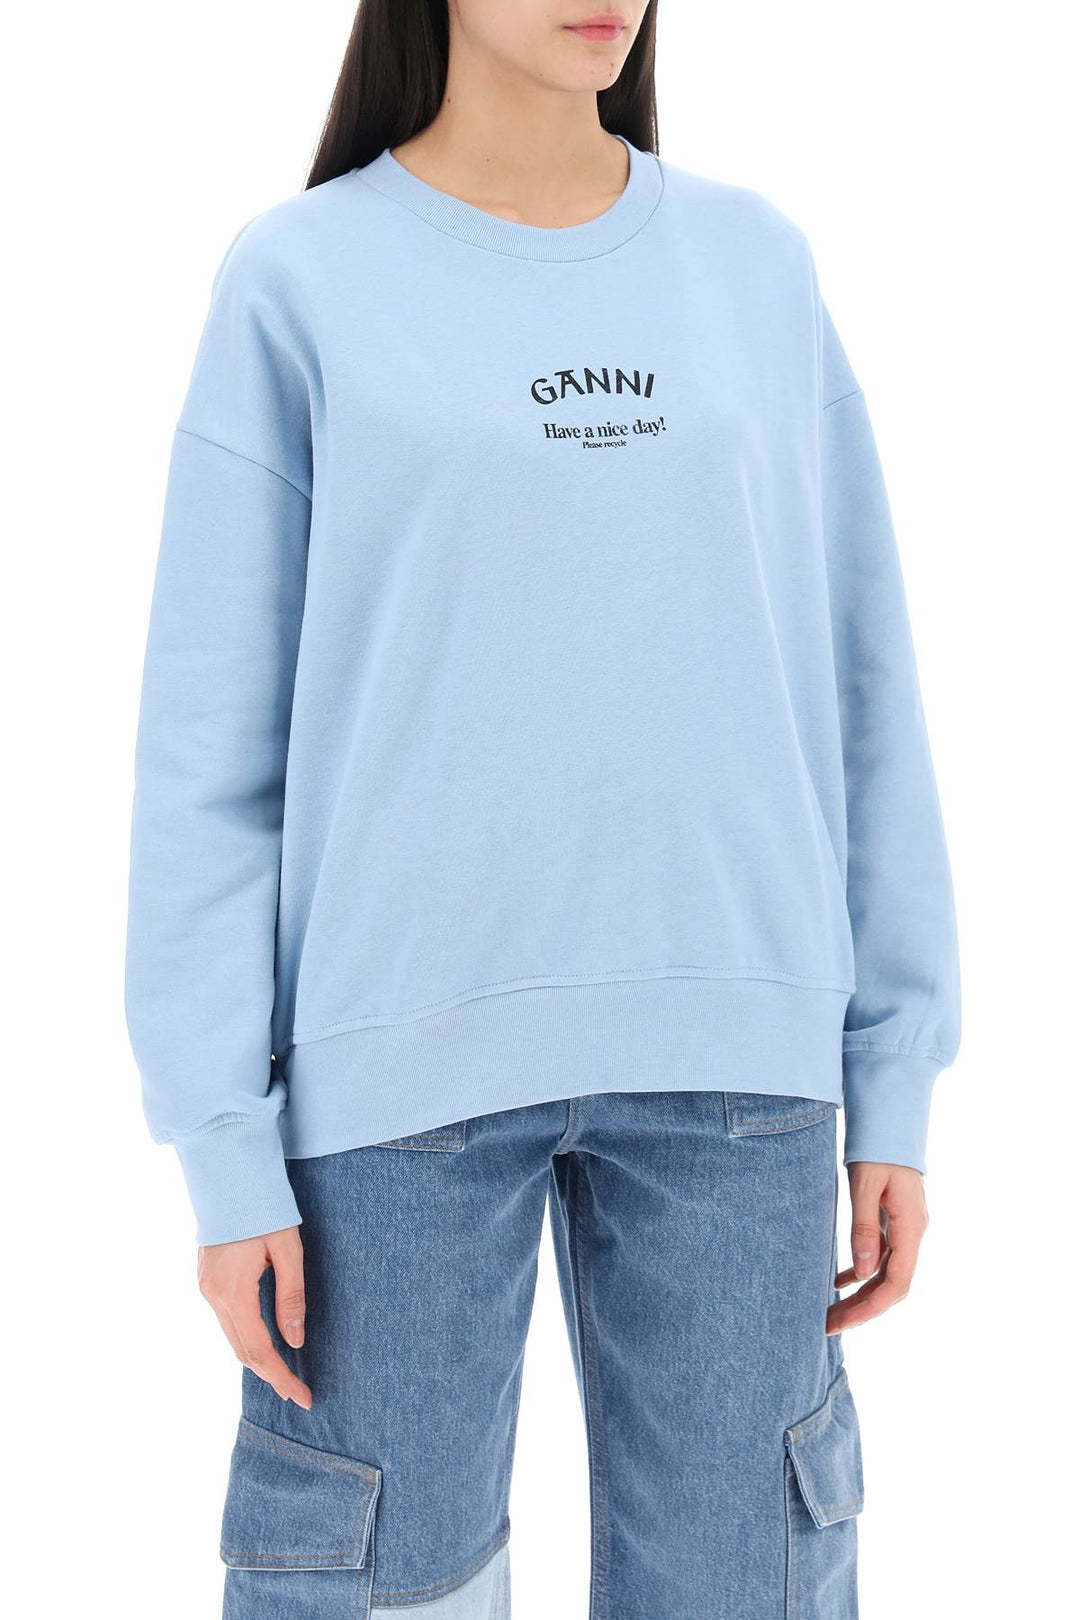 Ganni Organic Cotton Insulated Sweatshirt For   Celeste